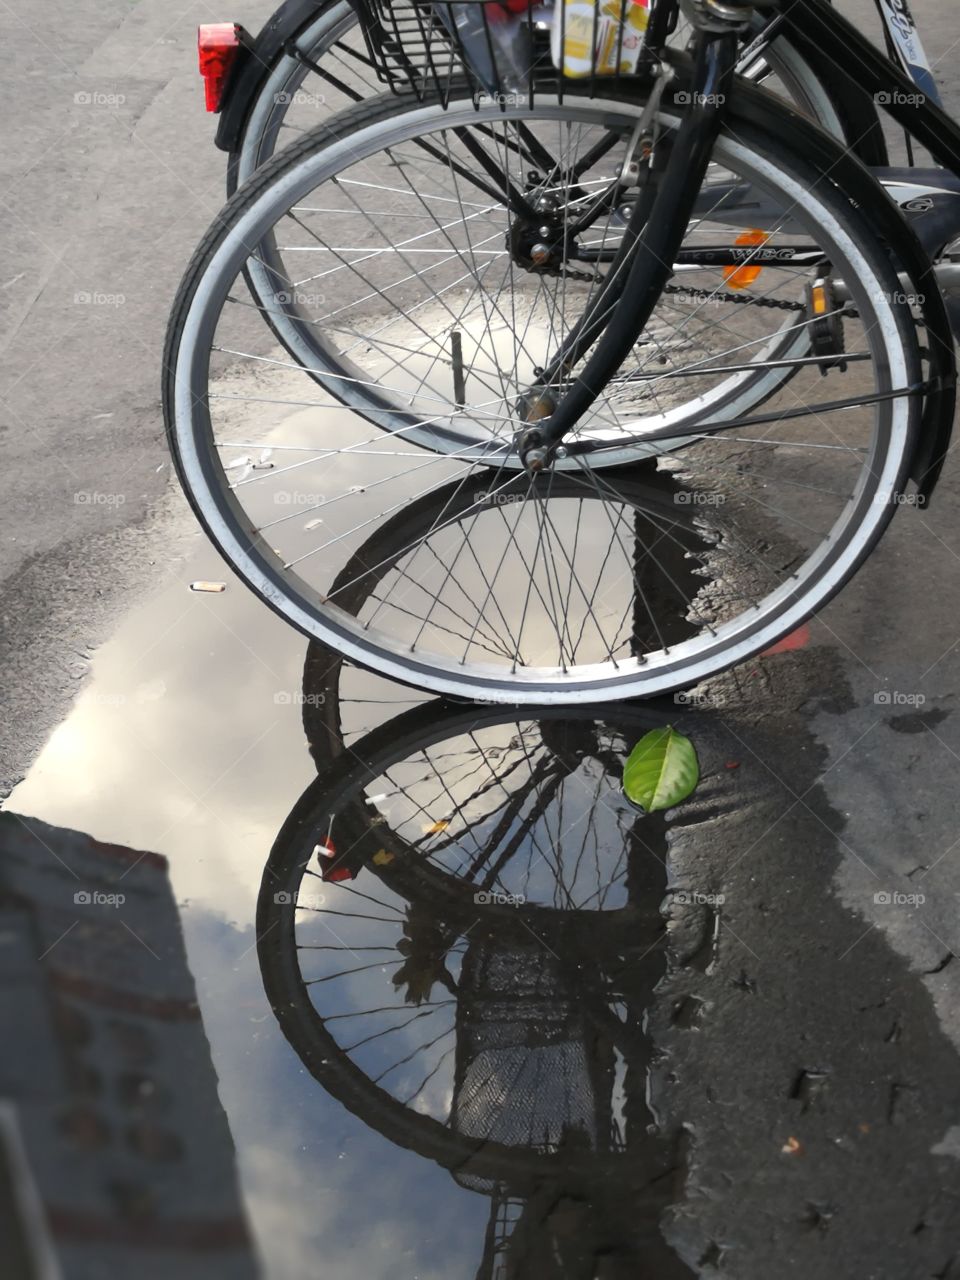 Bicycle rain reflections